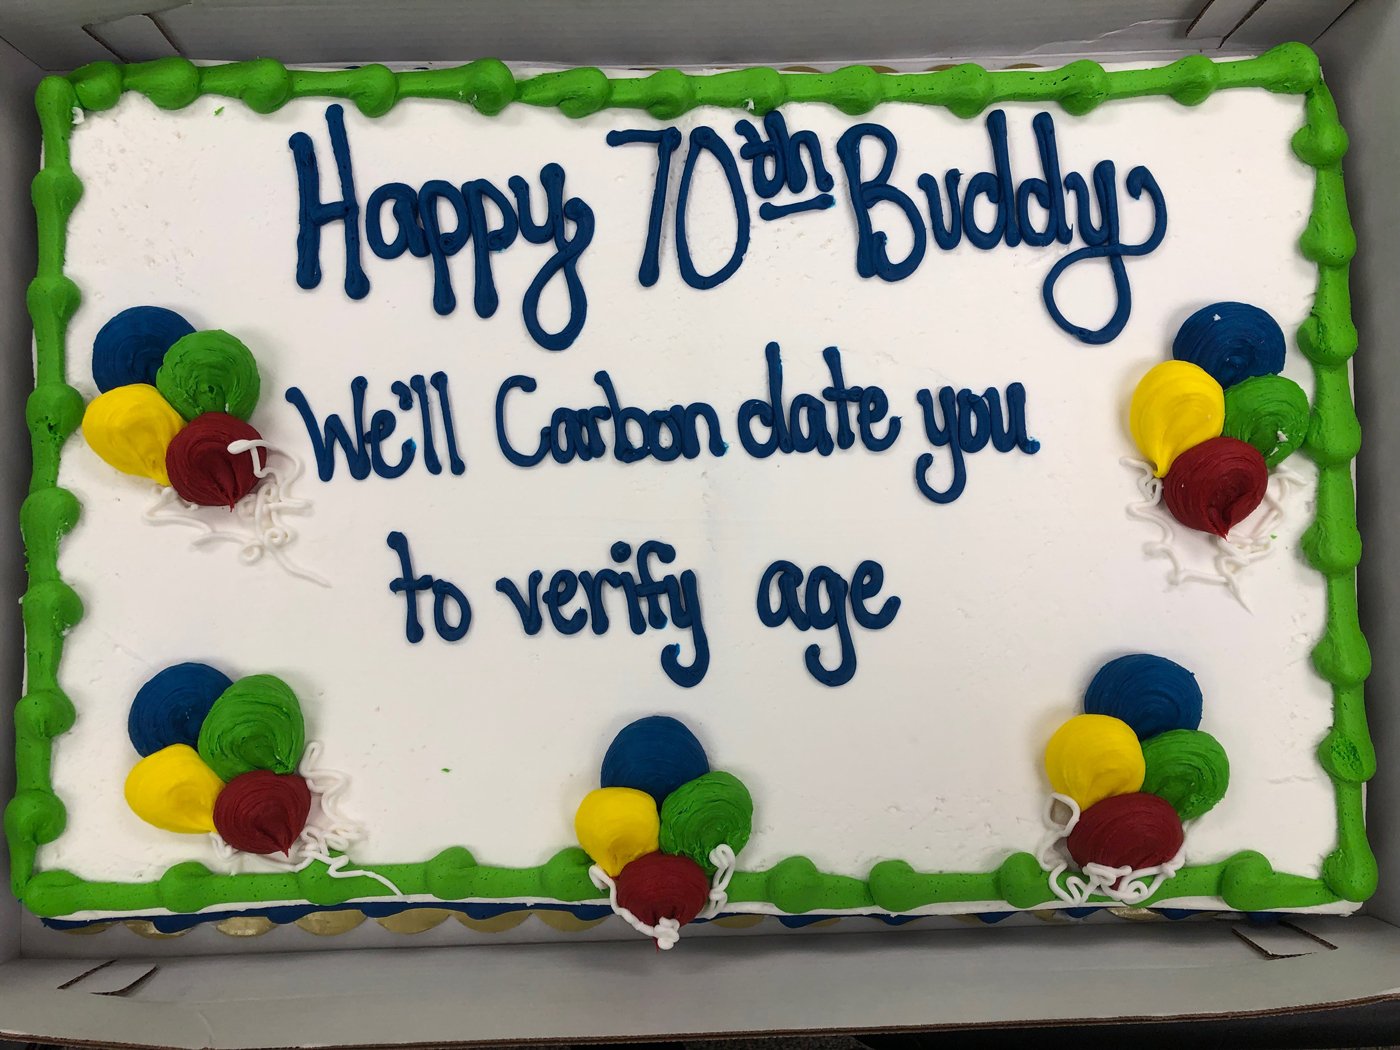 Buddy's Birthday Cake